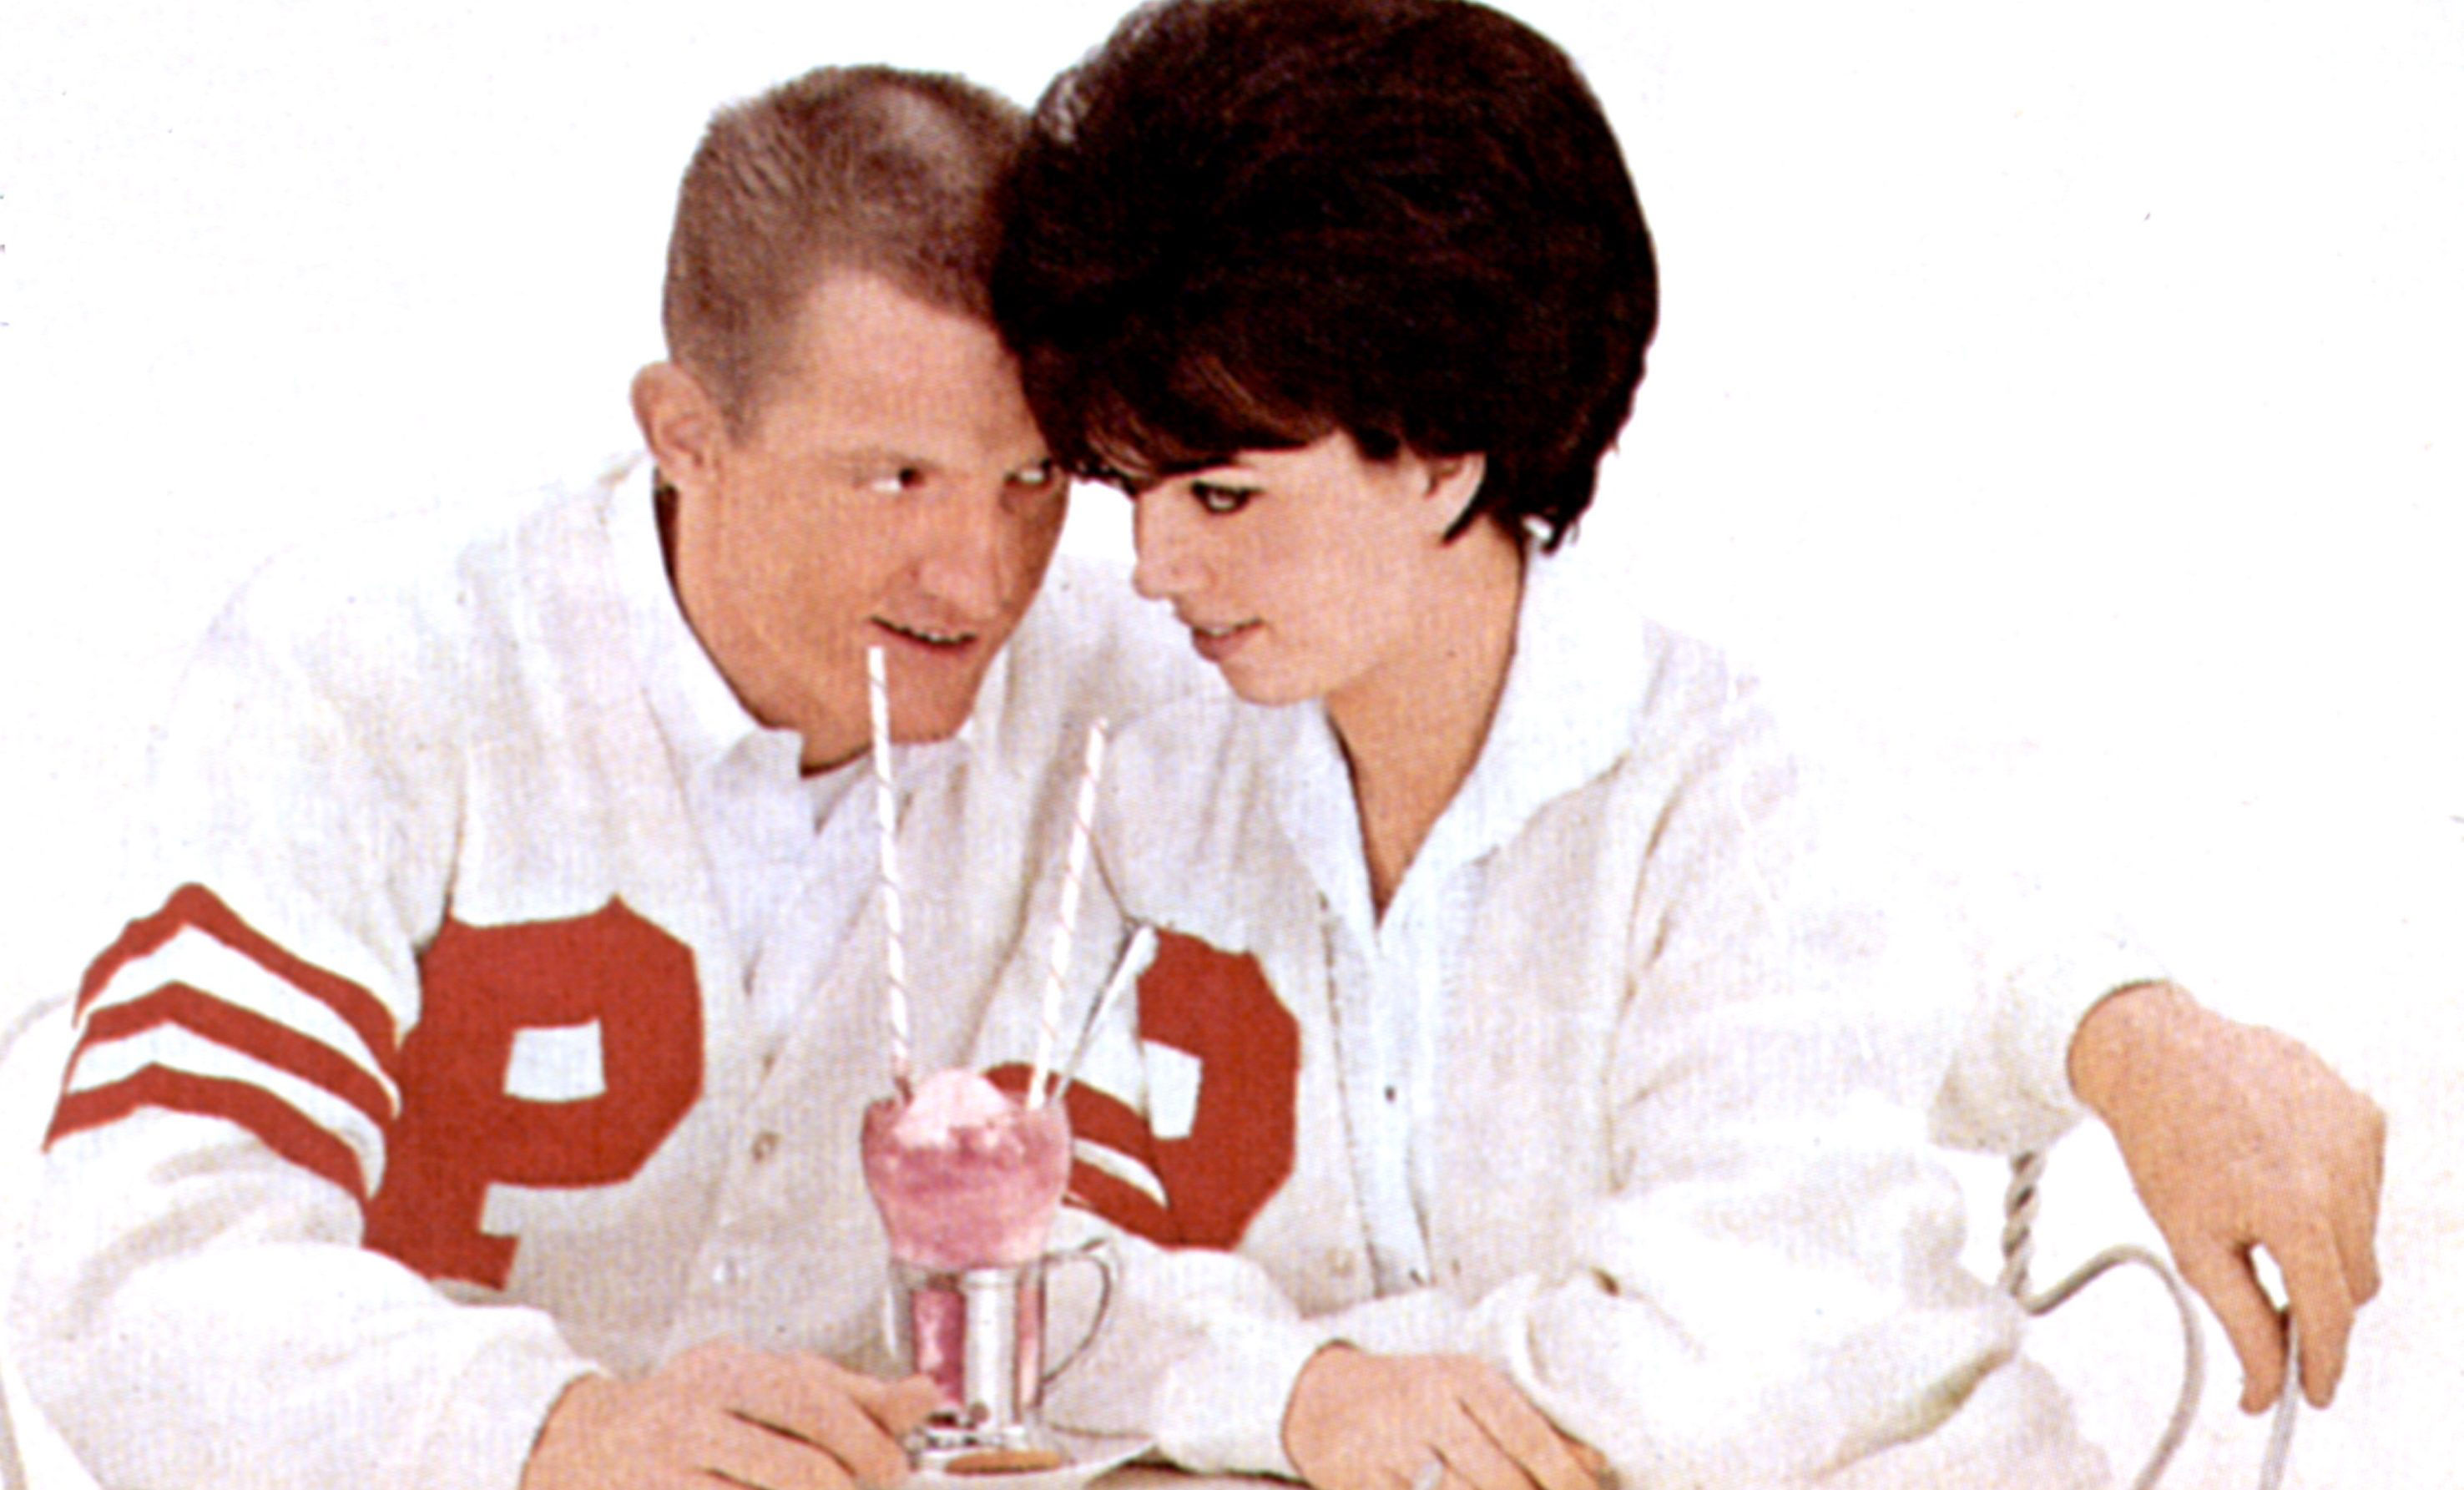 The ‘Paul’ of 1960s Pop Duo ‘Paul & Paula,’ Ray Hildebrand, Dies at 82